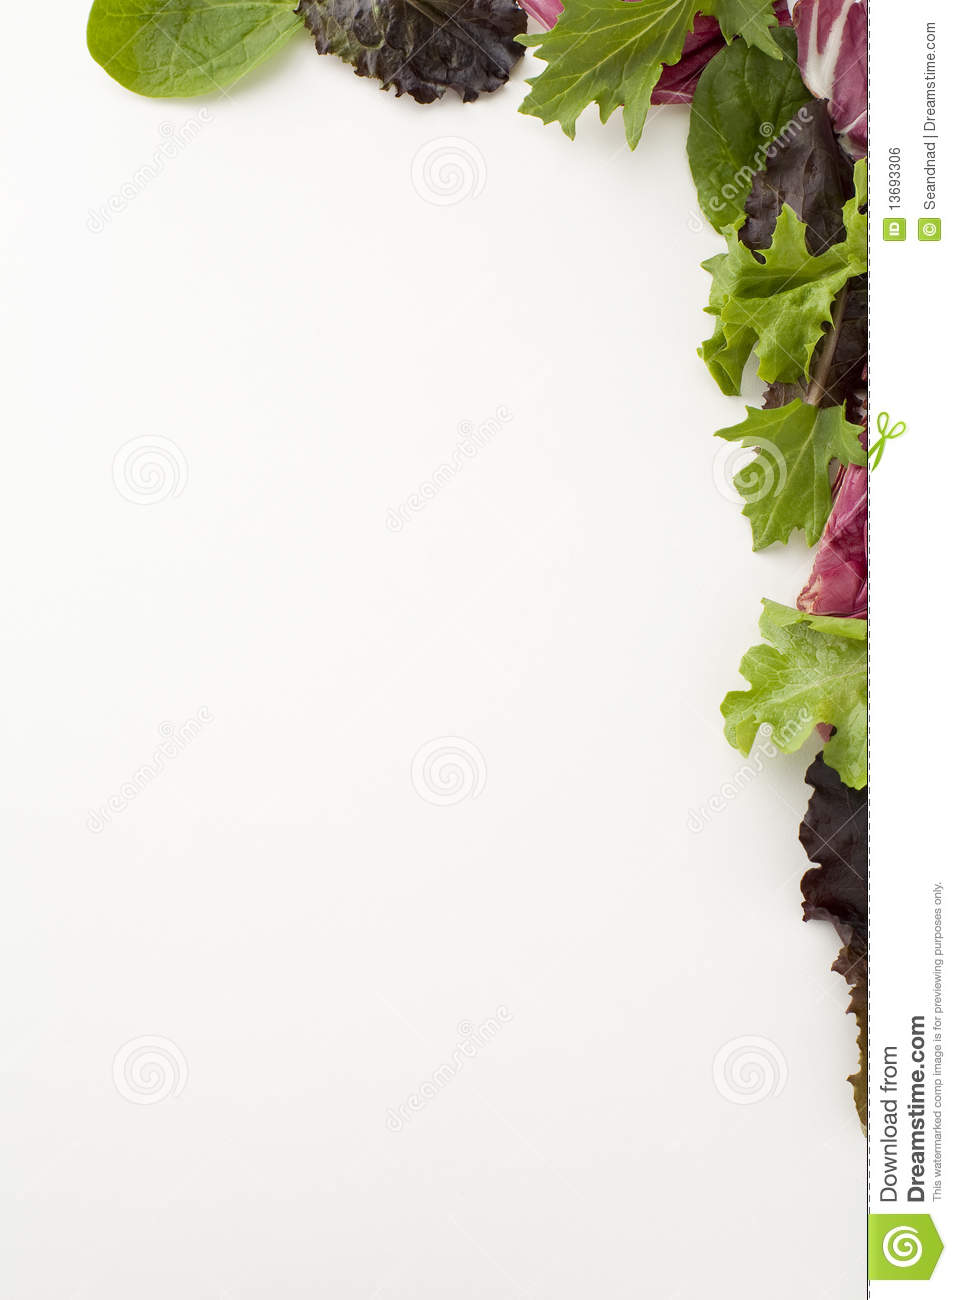 Salad Border Royalty Free Stock Image   Image  13693306